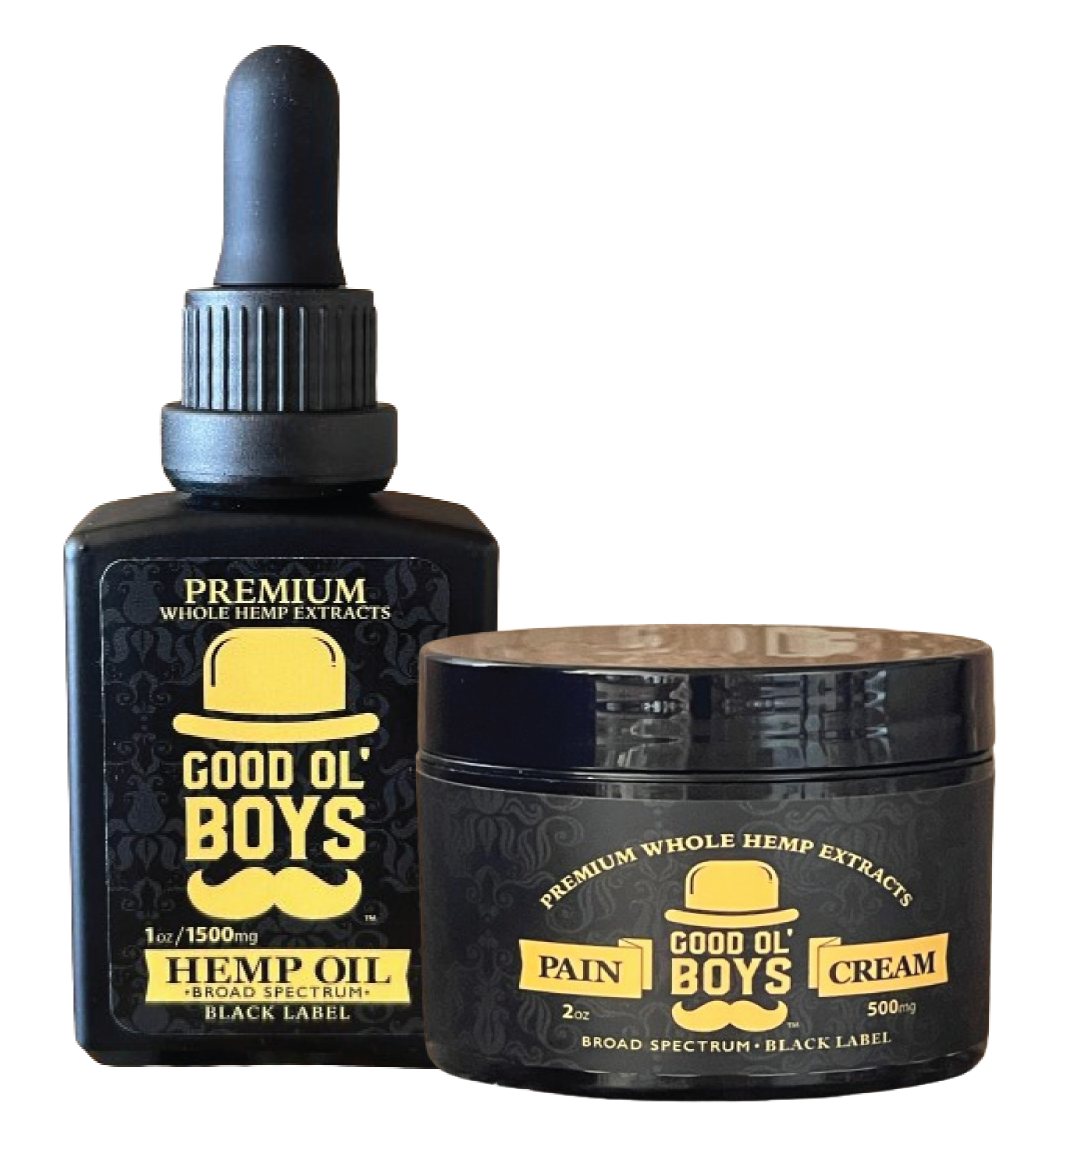 Cbd products | Hemp oil for pain | Oral tincture - Good Ol Boys